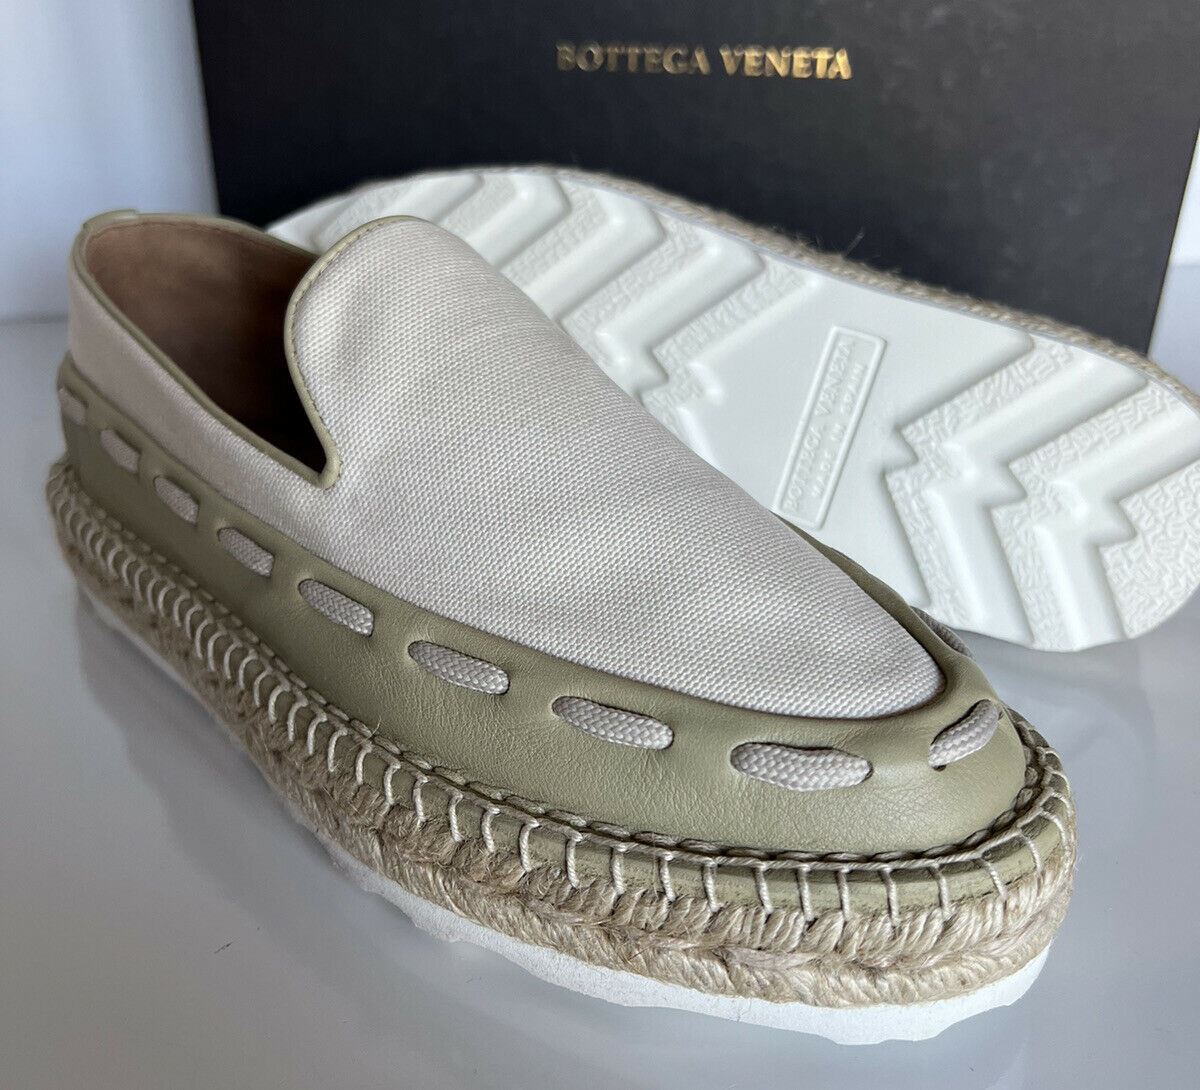 NIB $620 Bottega Veneta Women's Slip-on Espadrilles Shoes 7 US (37 Euro) 578386